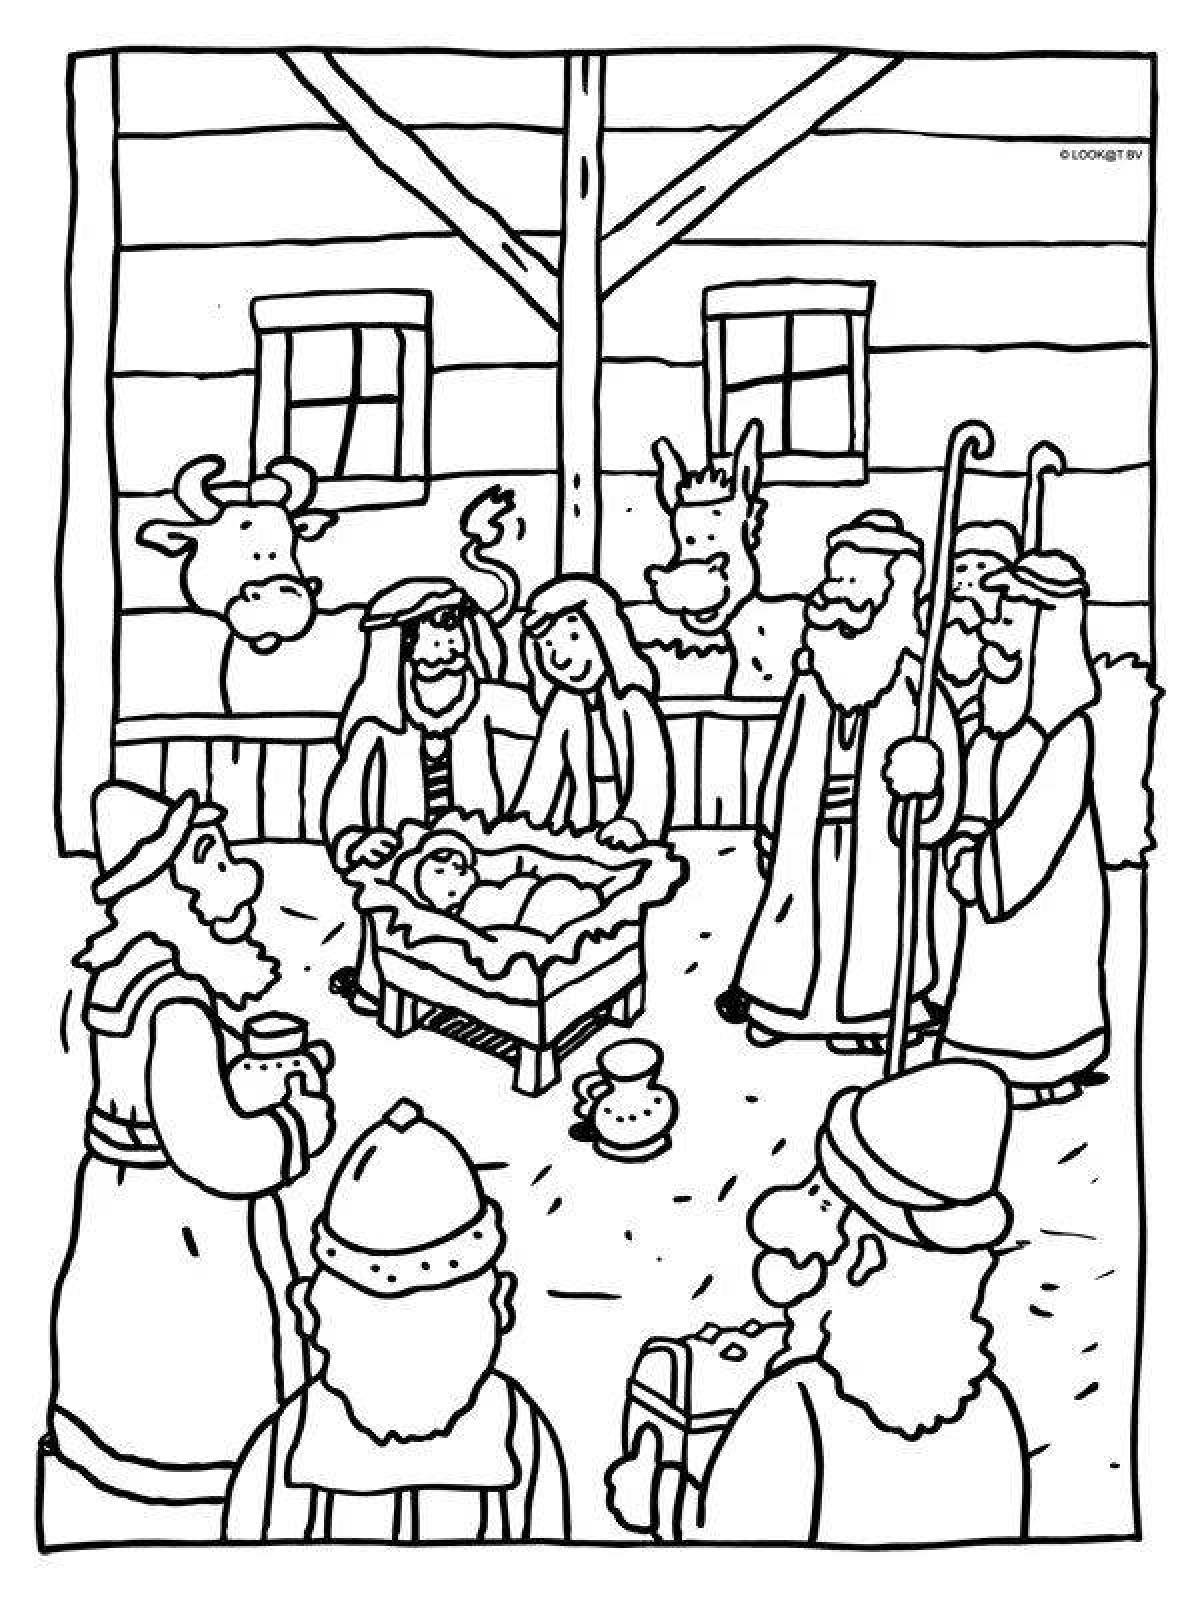 Magic Christmas coloring page